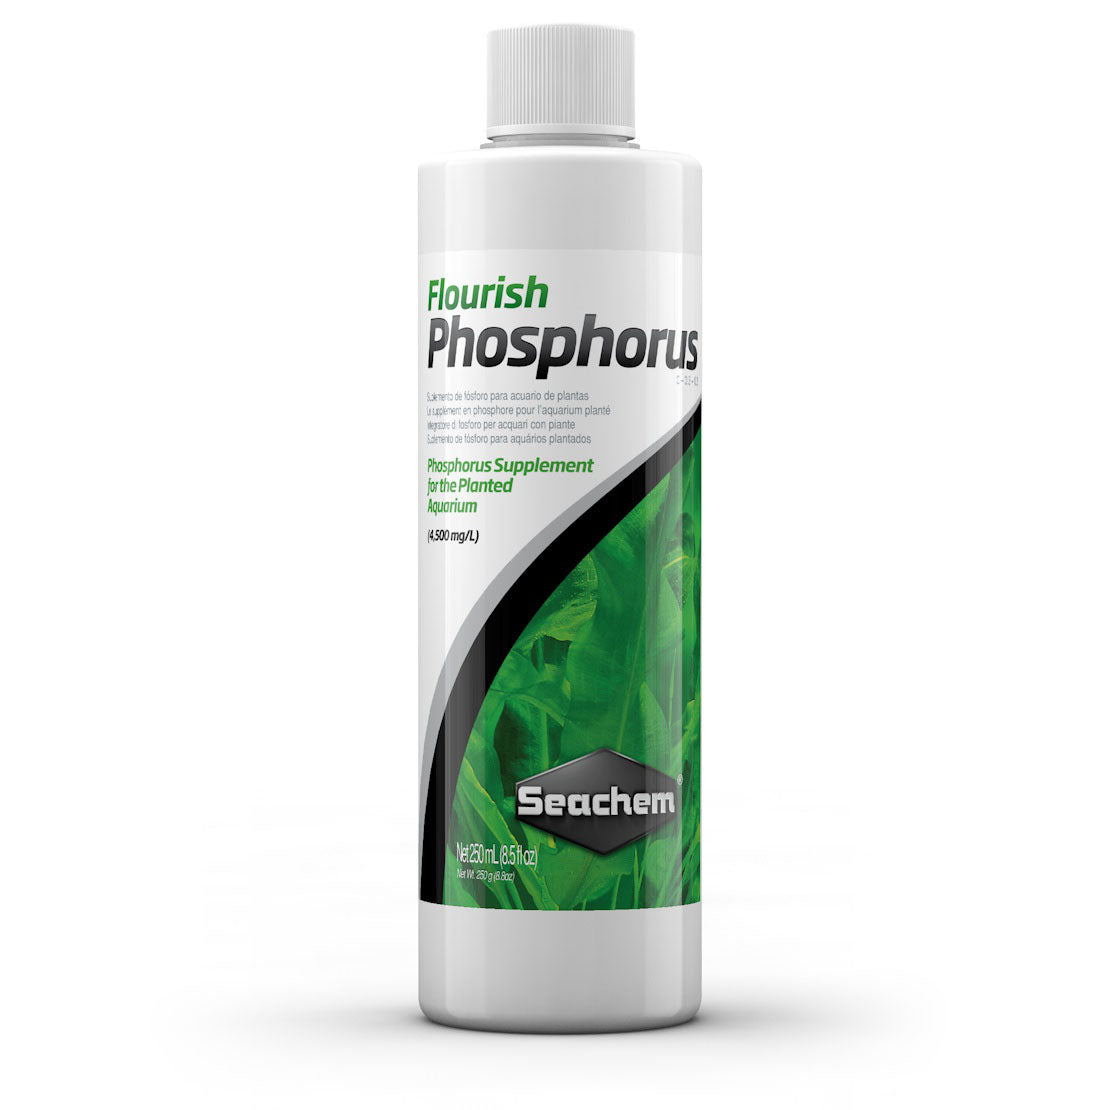 New Seachem Flourish Phosphorus 250ml, supplement for live plants